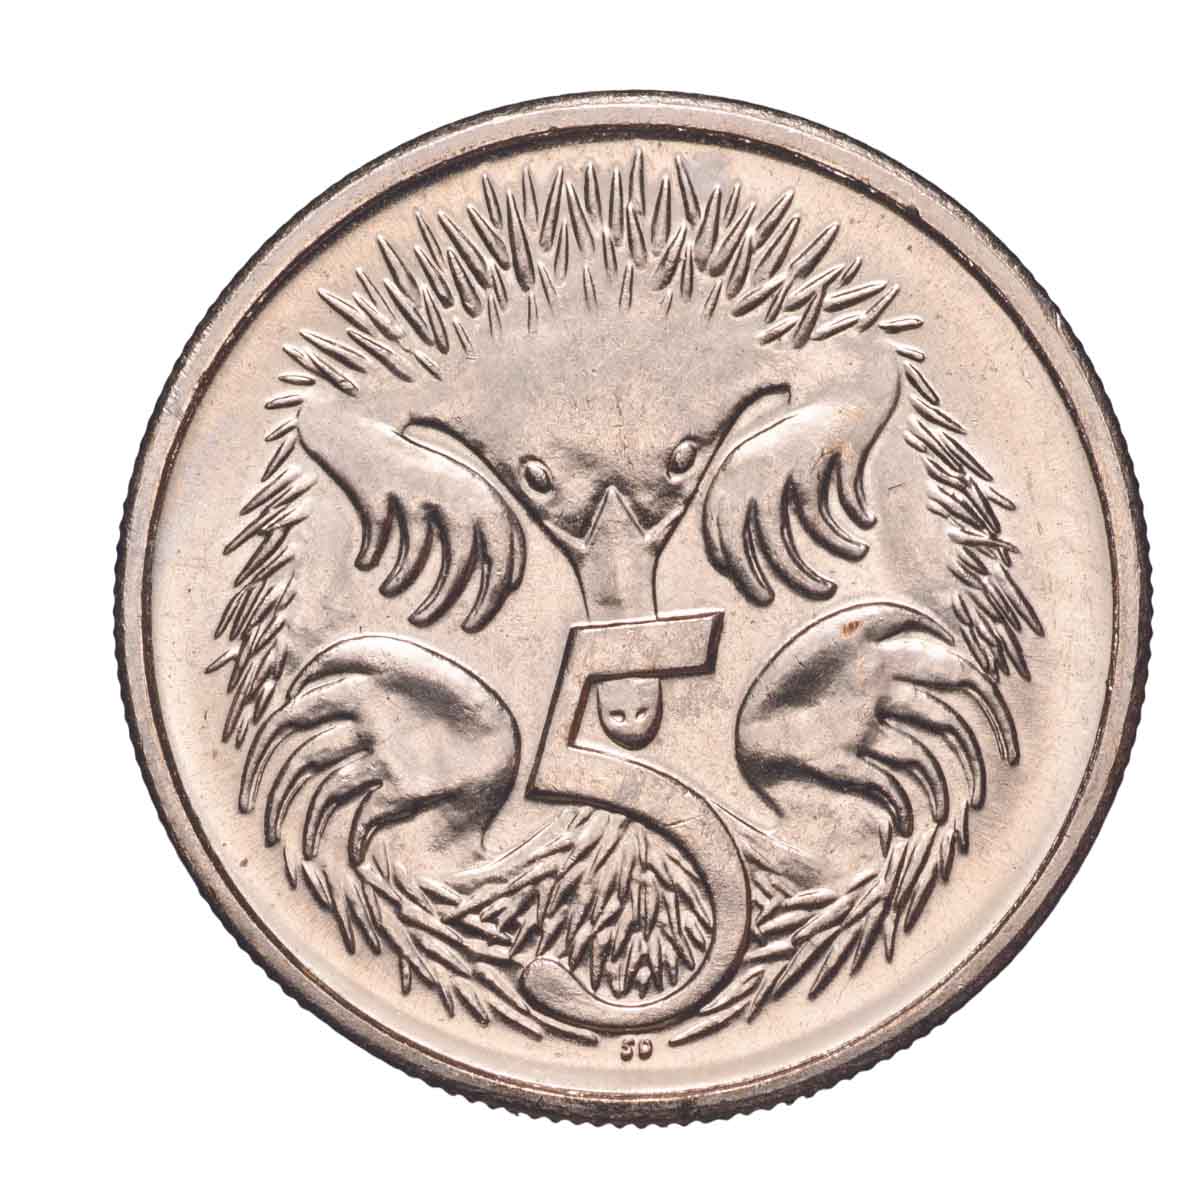 RAM 1981 5c Mint Roll (40 Uncirculated Coins)